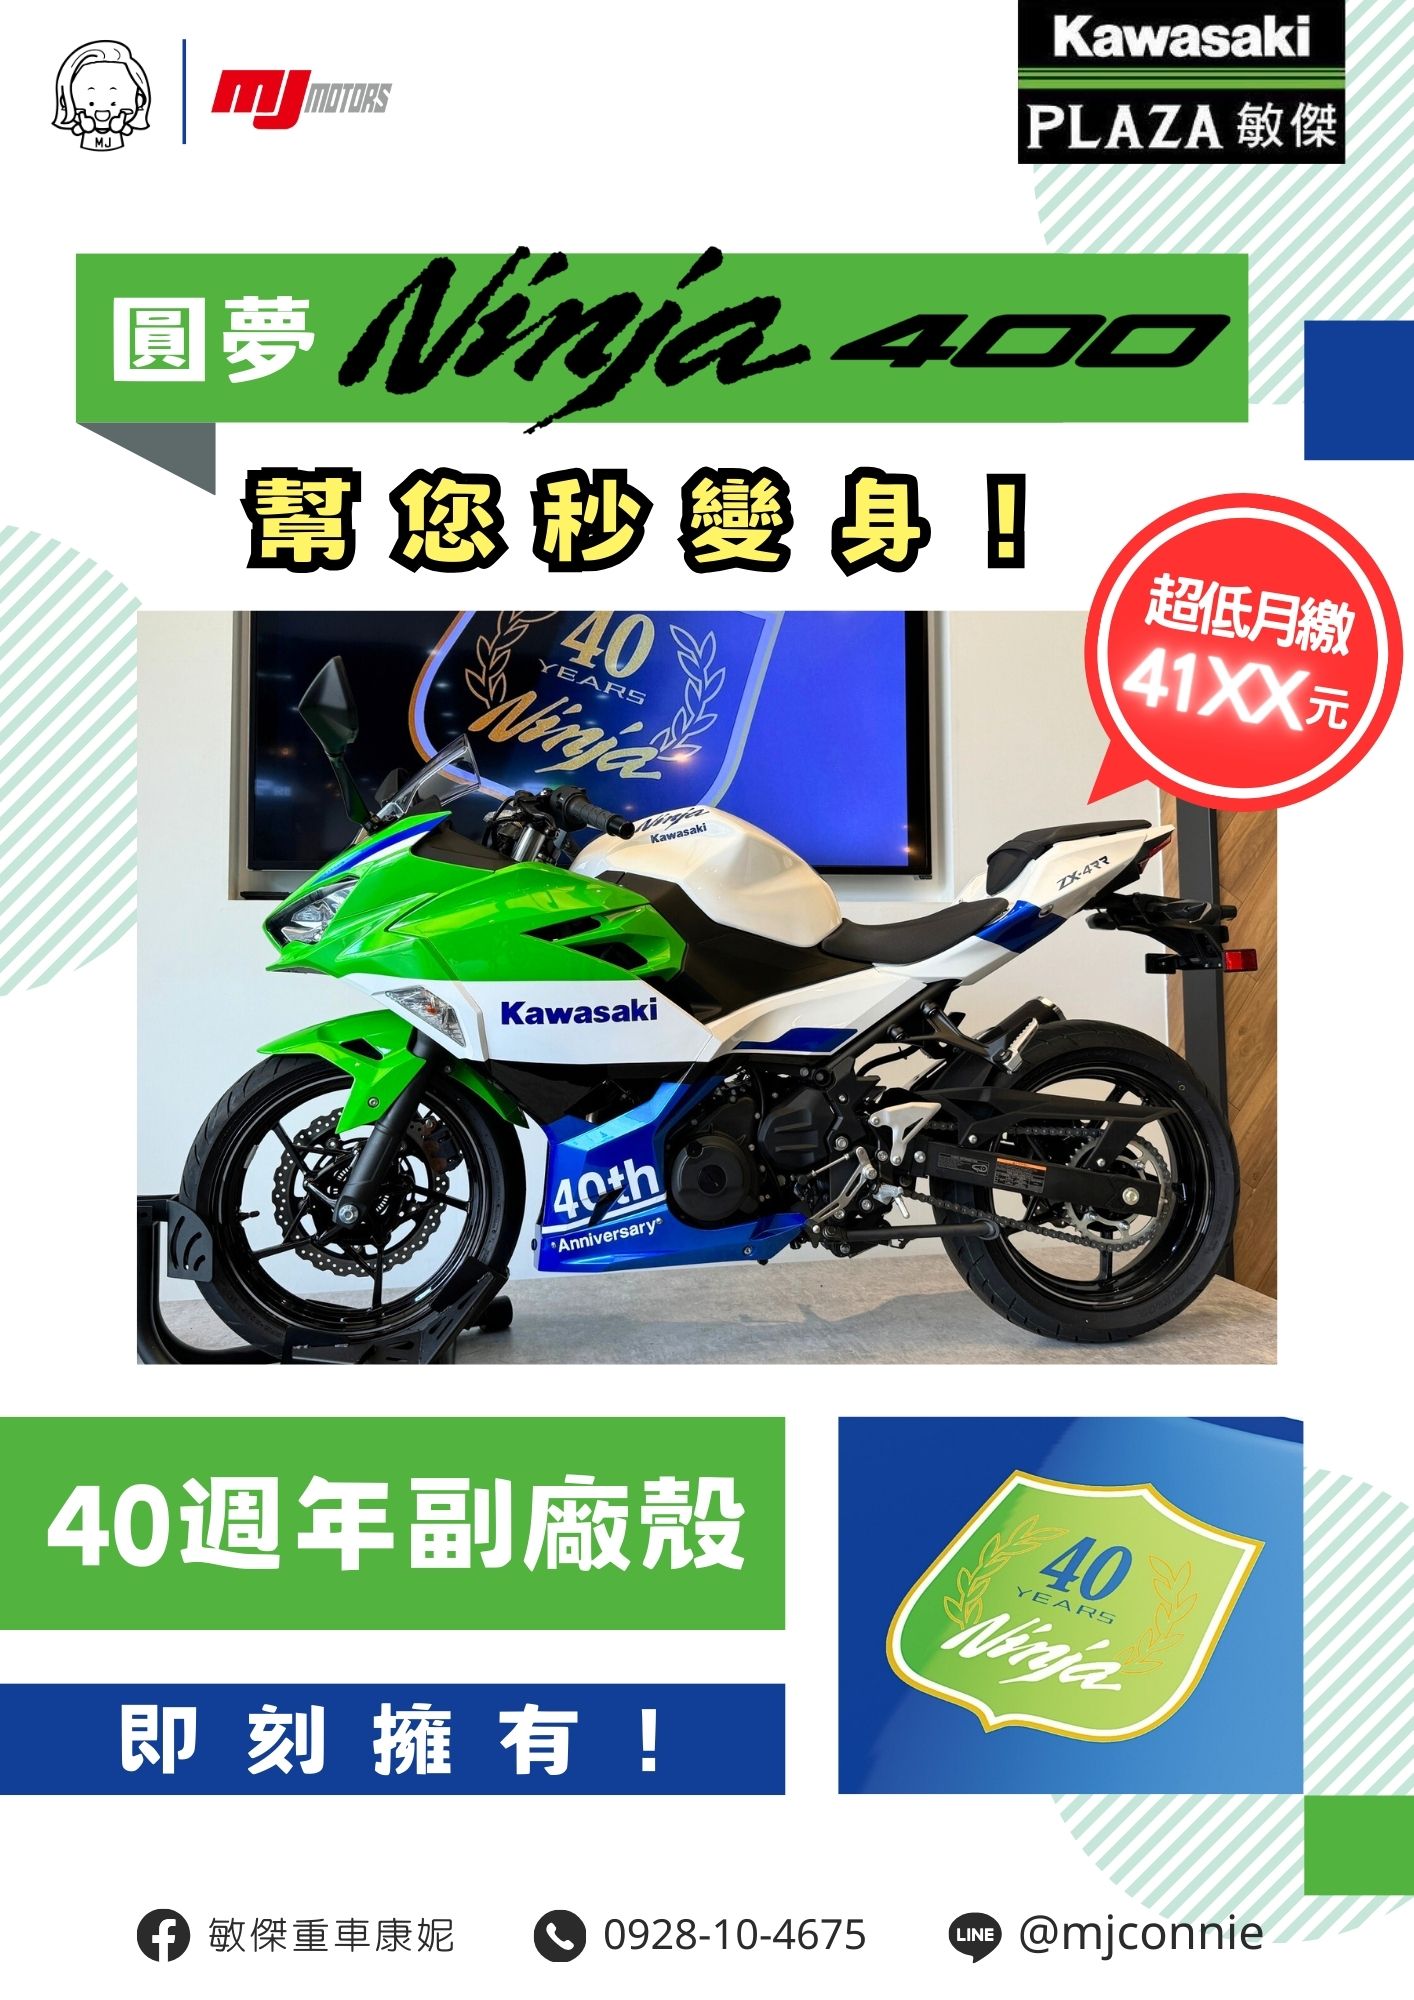 KAWASAKI NINJA400新車出售中 『敏傑康妮』 Kawasaki Ninja400 無敵方案四選一任您選~~ 再送您一頂全罩安全帽 | 敏傑車業資深銷售專員 康妮 Connie